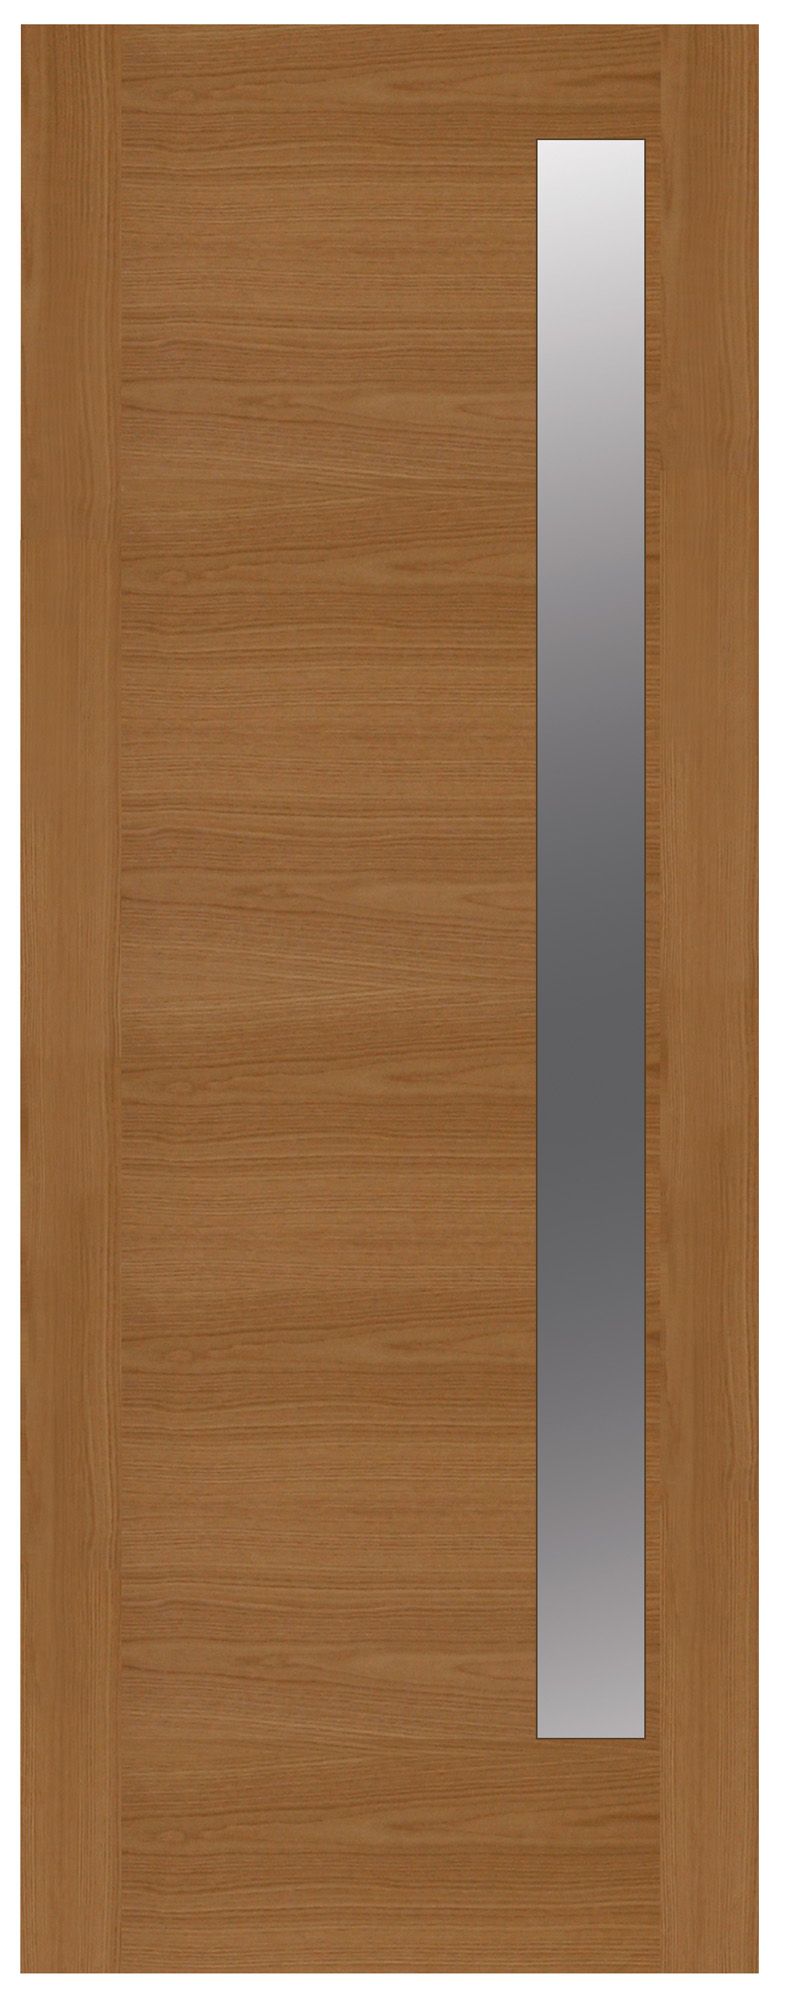 Frosted Glazed Wooden White oak veneer External Front door, (H)2032mm (W)813mm